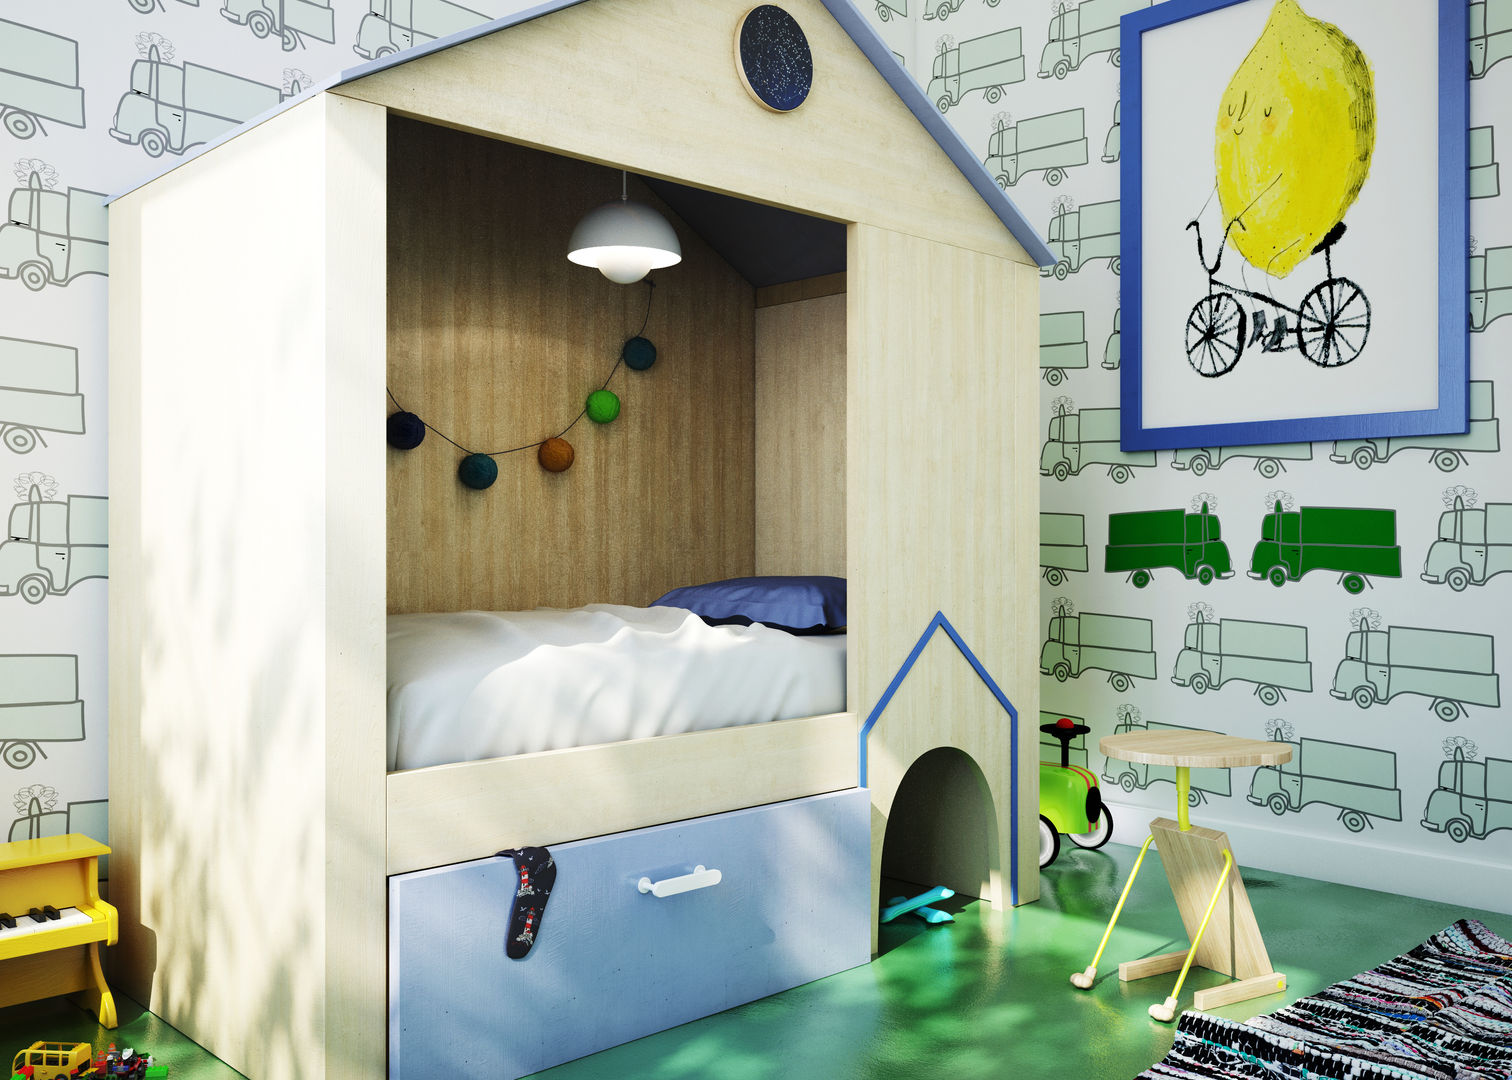 Wallpaper Ilomas Humpty Dumpty Room Decoration Nursery/kid’s room